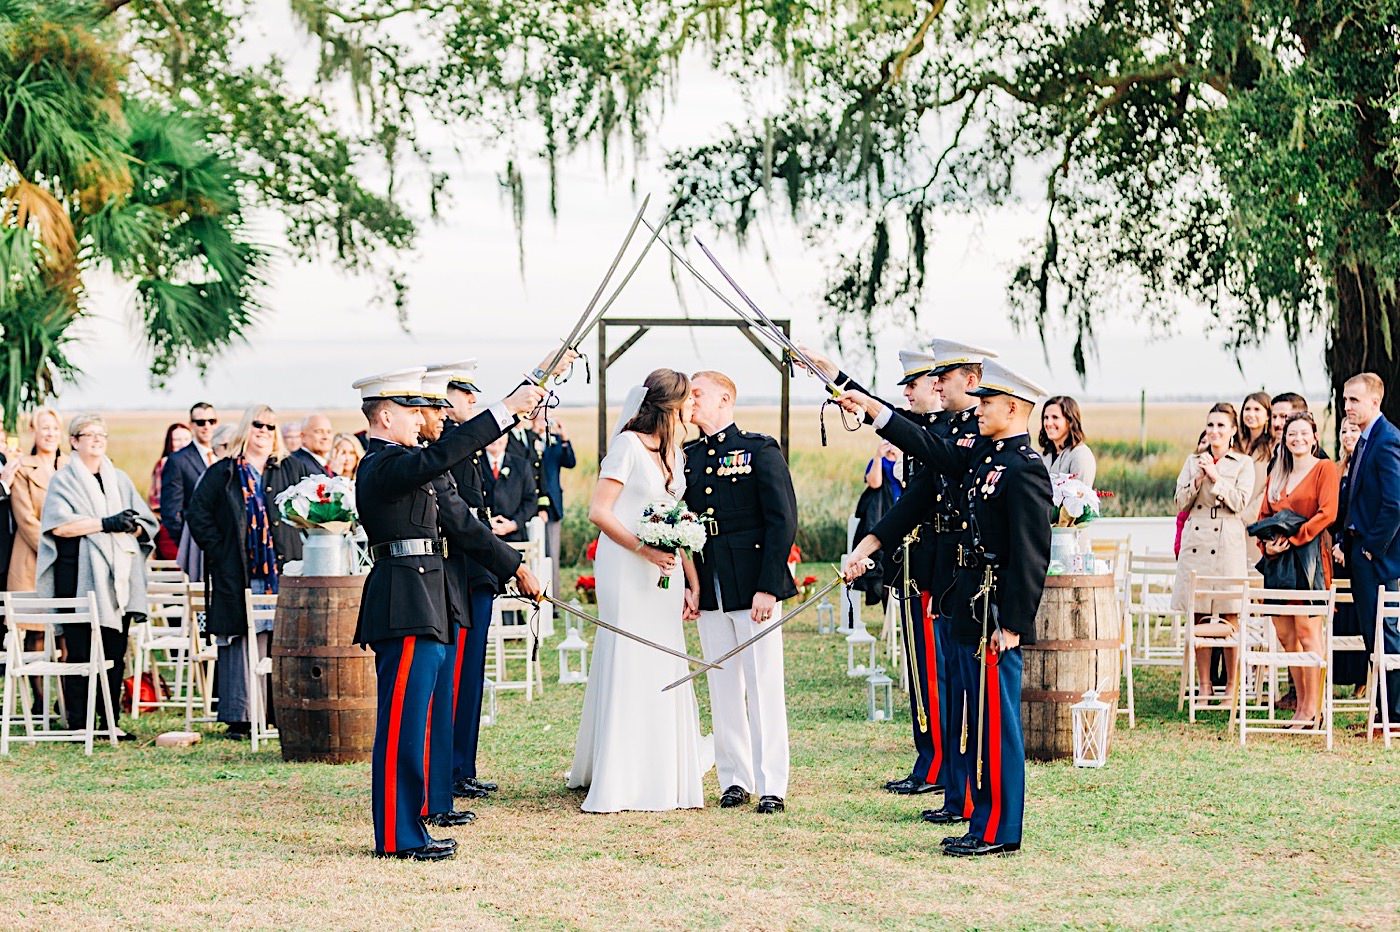 Agapae Oaks Wedding in Beaufort, Marine Corps wedding, sword arch at wedding